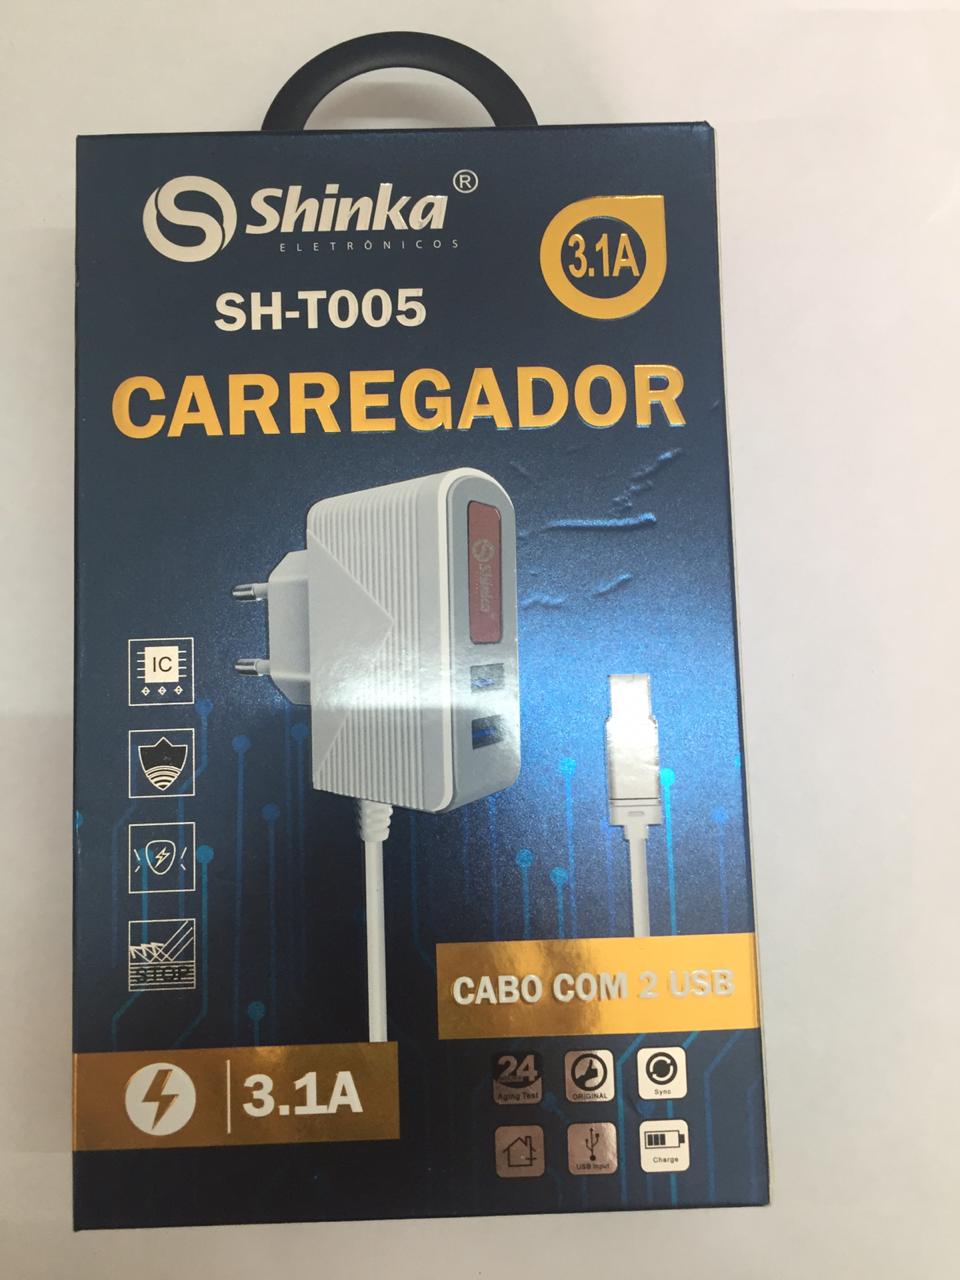 CARREGADOR TOMADA 2 USB 5V- 3.1A - CHIPS INTELIGENTE - PROTEÇAO DE CARGA TOTAL - SHINKA SH-T005-V8